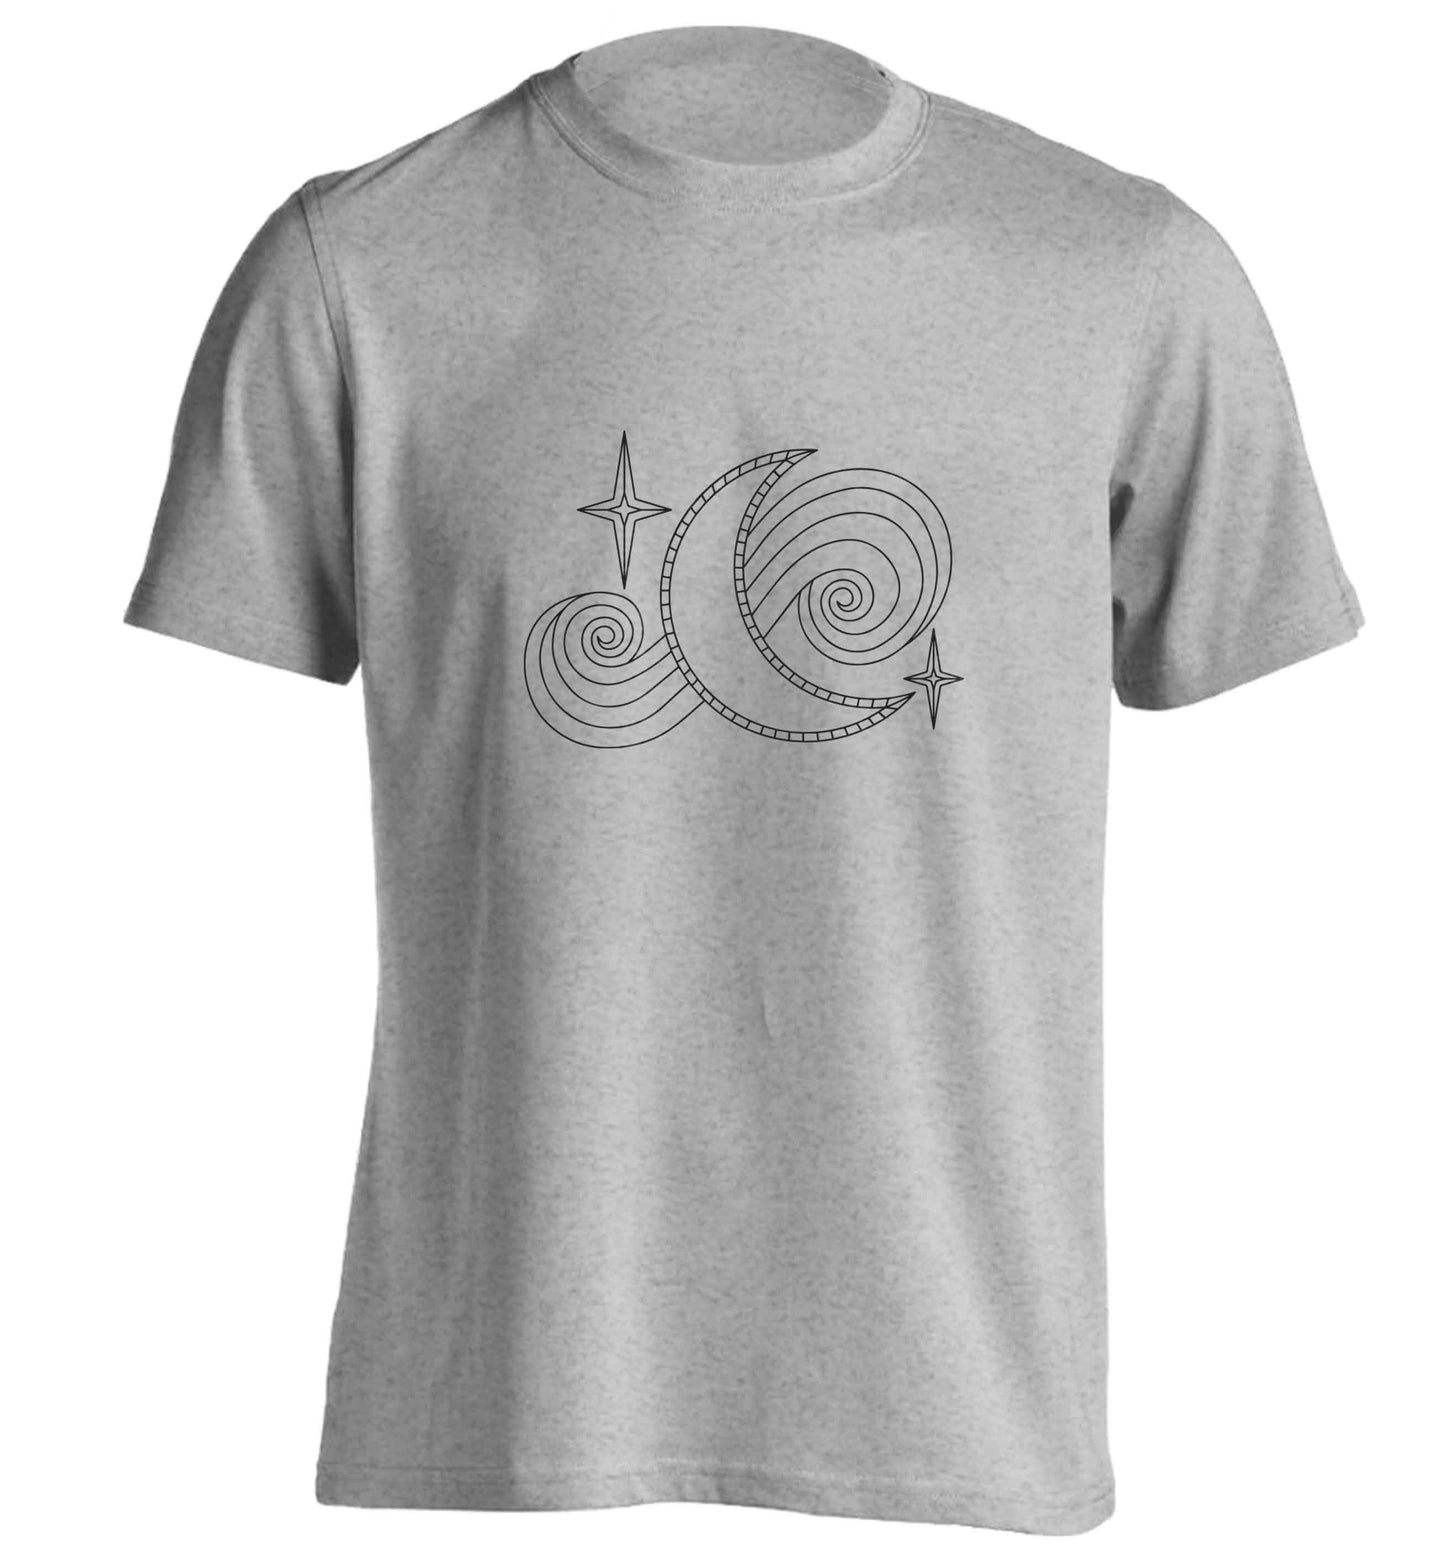 Moon and stars illustration adults unisex grey Tshirt 2XL